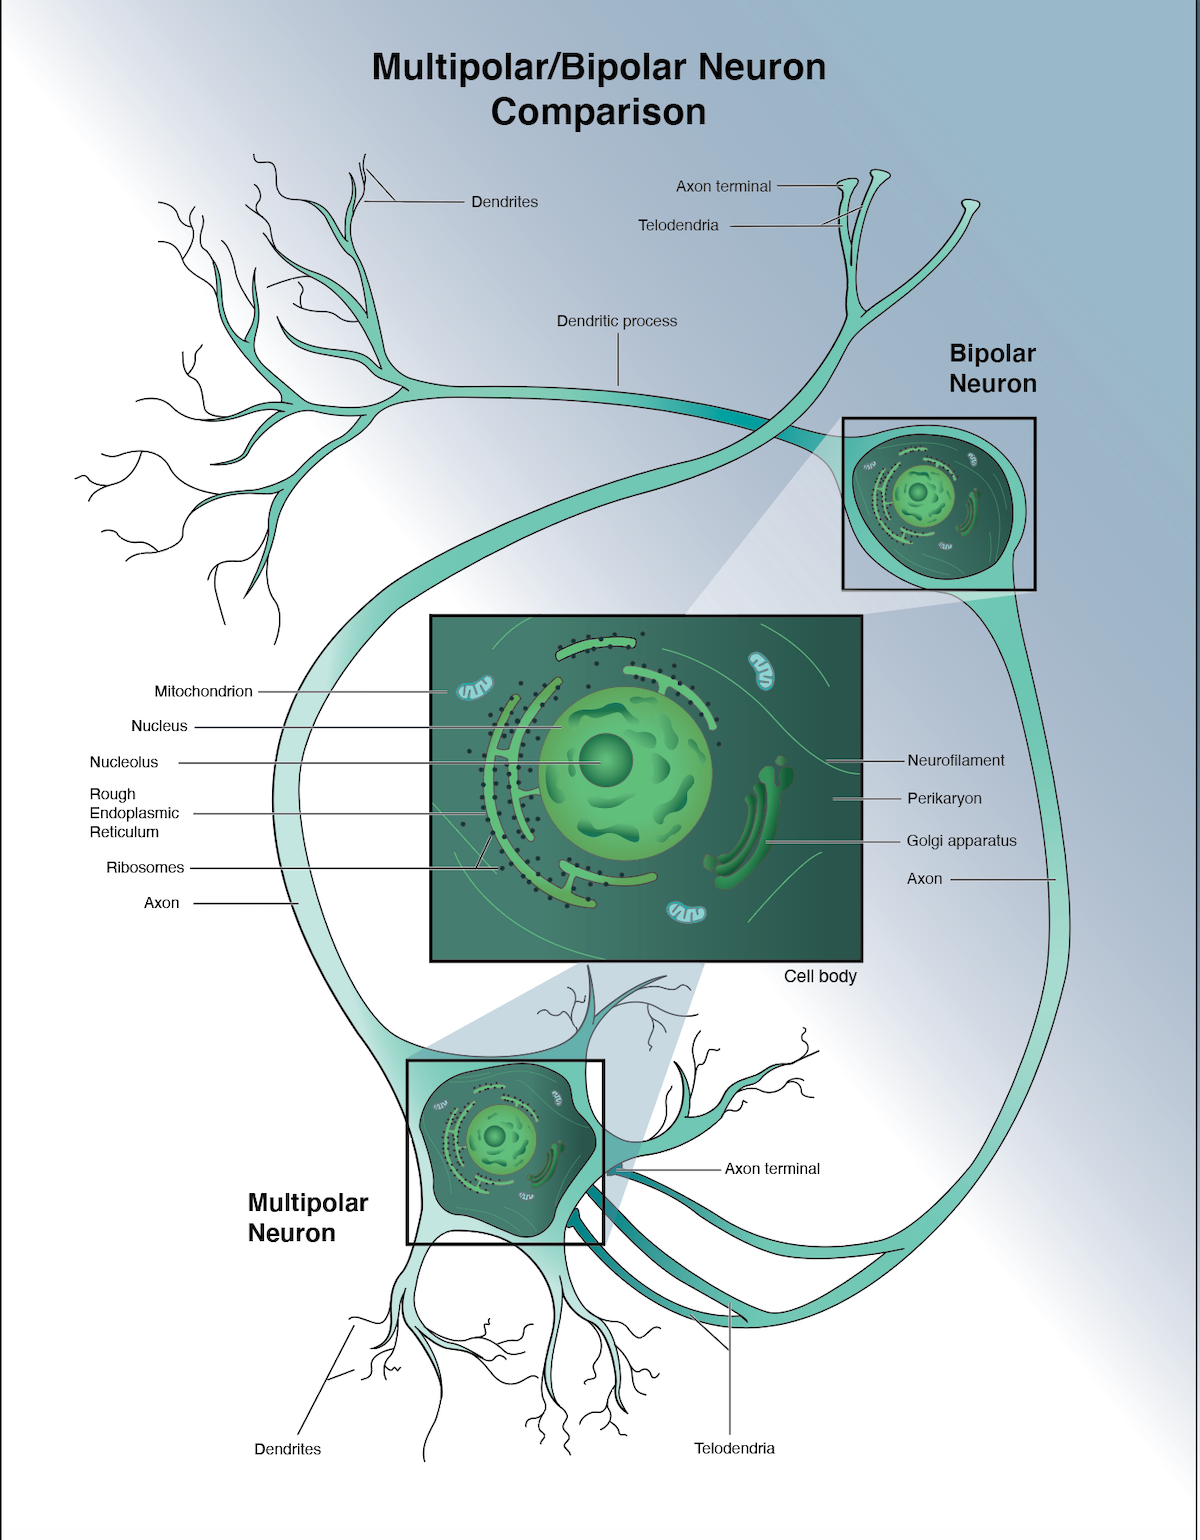 Multipolar/Bipolar Neuron Comparison